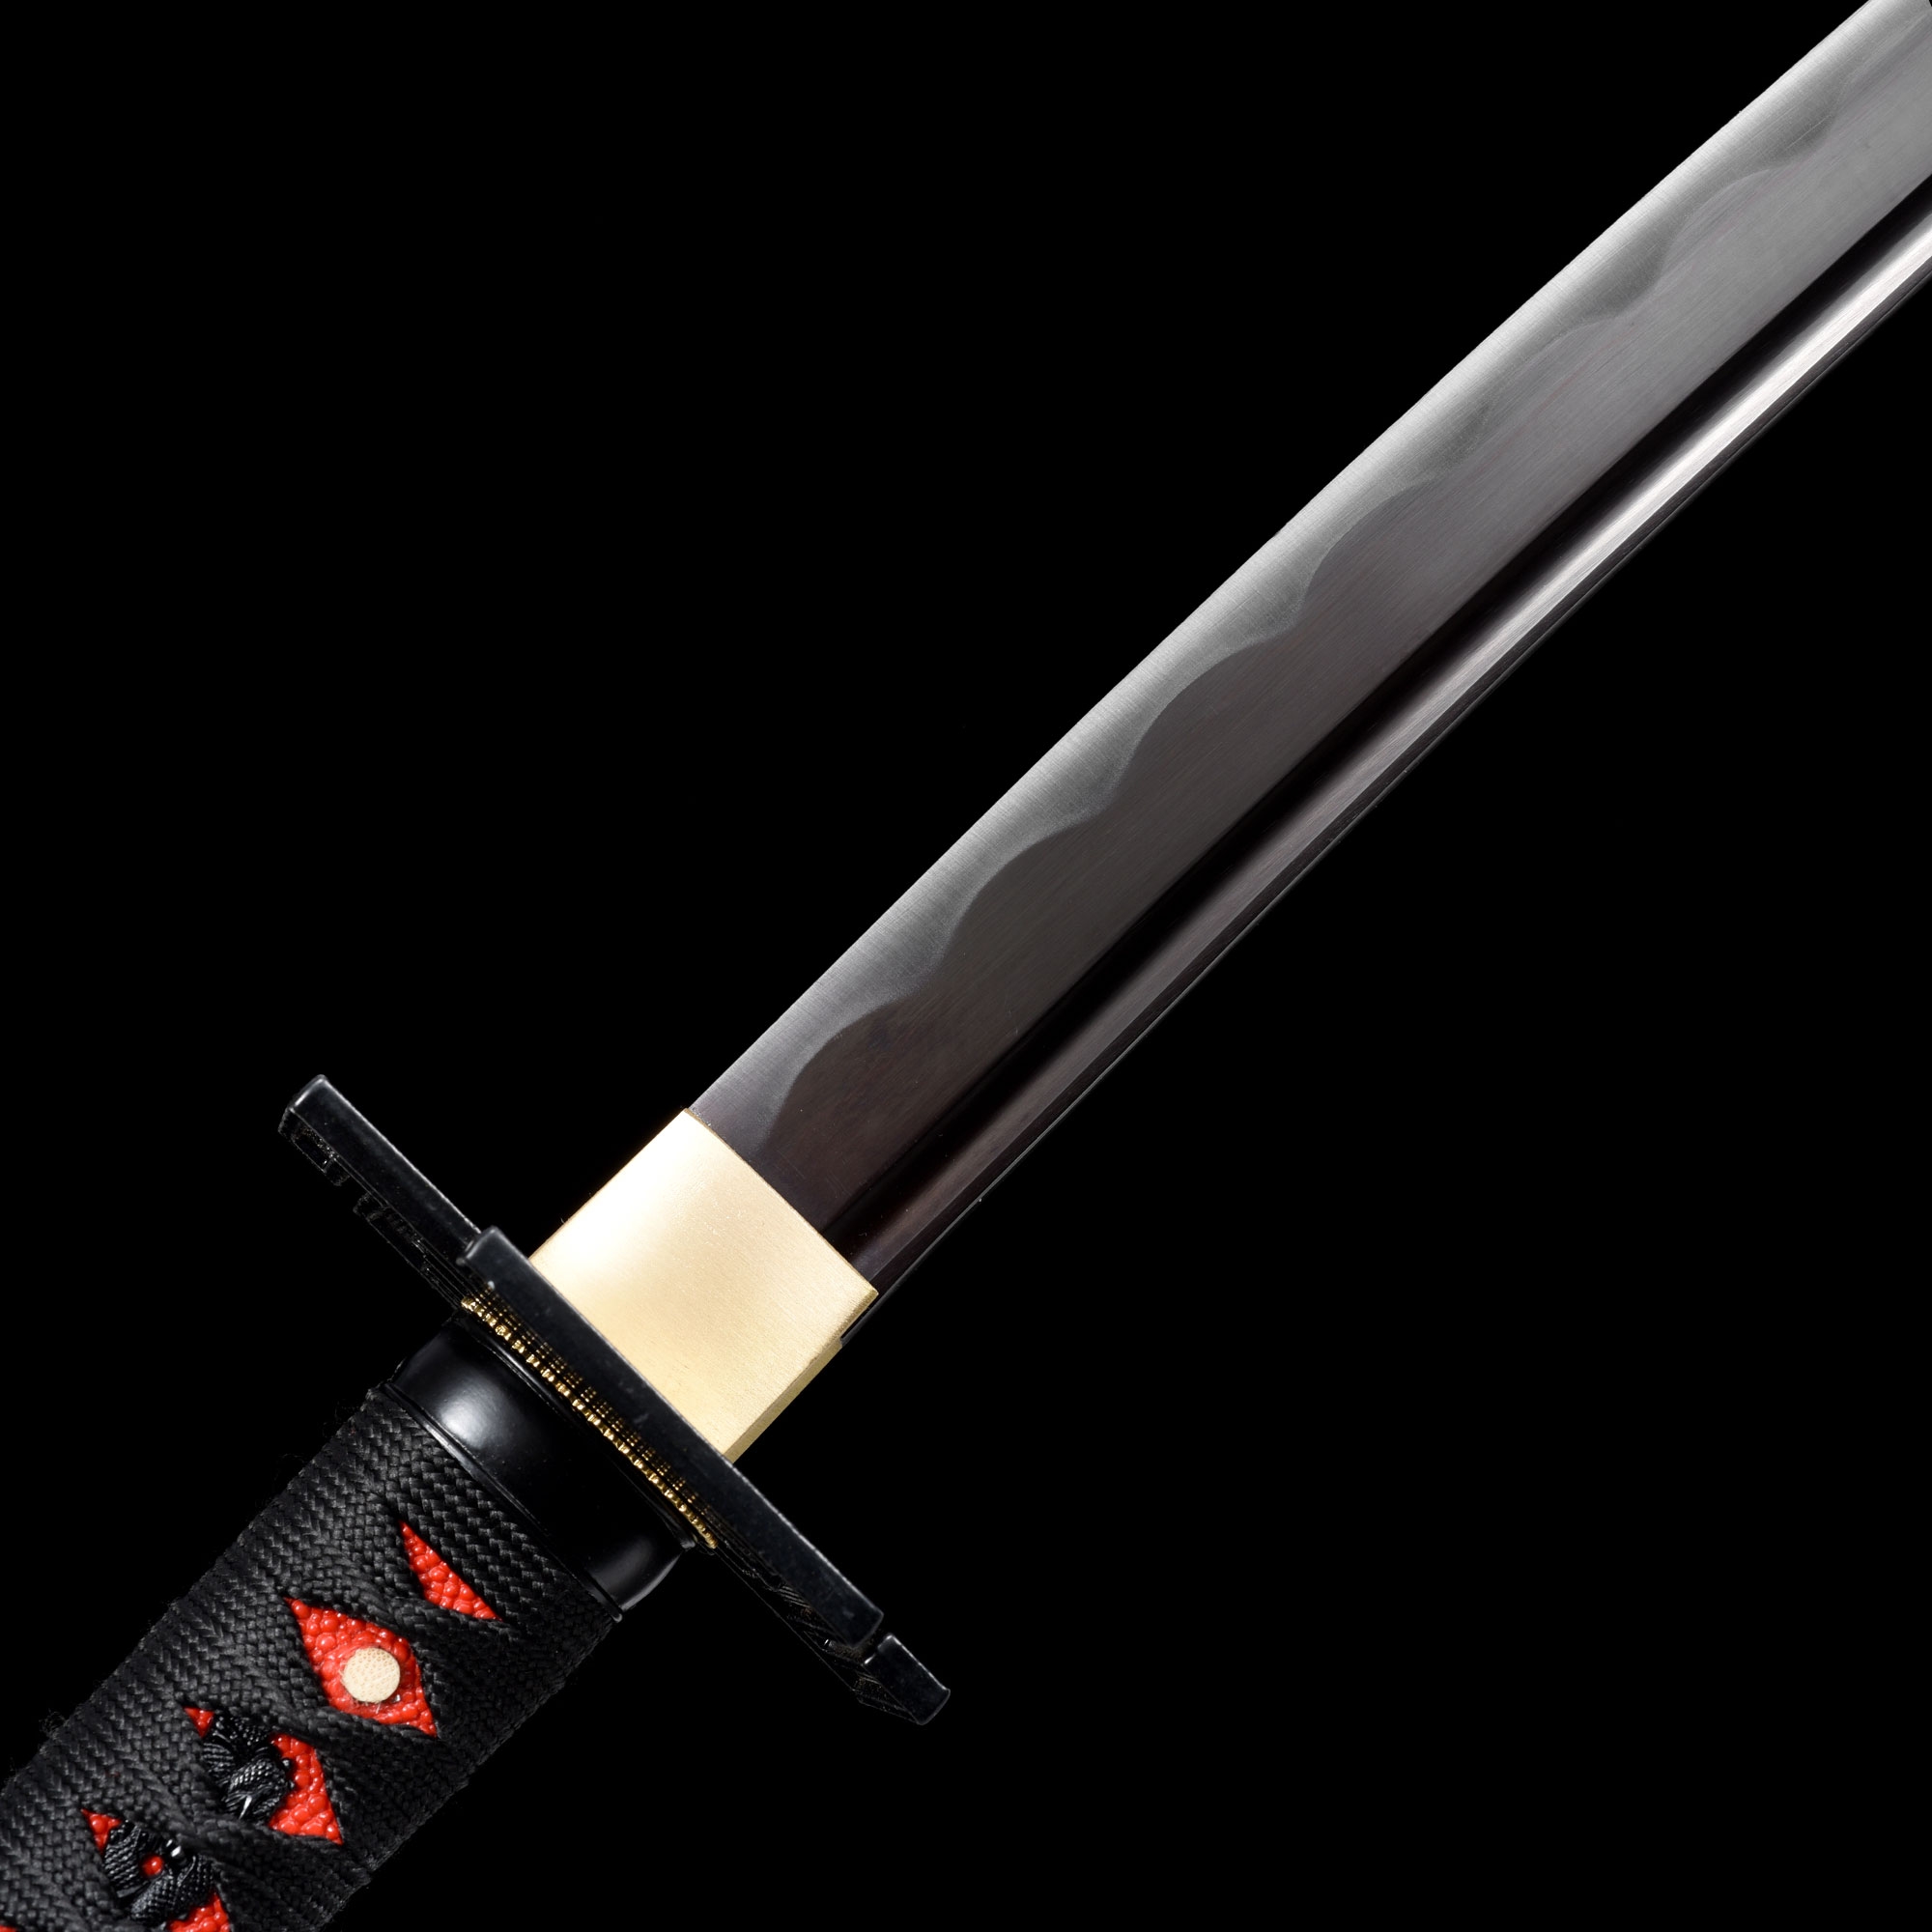 BLEACH ICHIGO BANKAI SWORD Handmade Tensa zangetsu Anime Katana Sword JW-0517